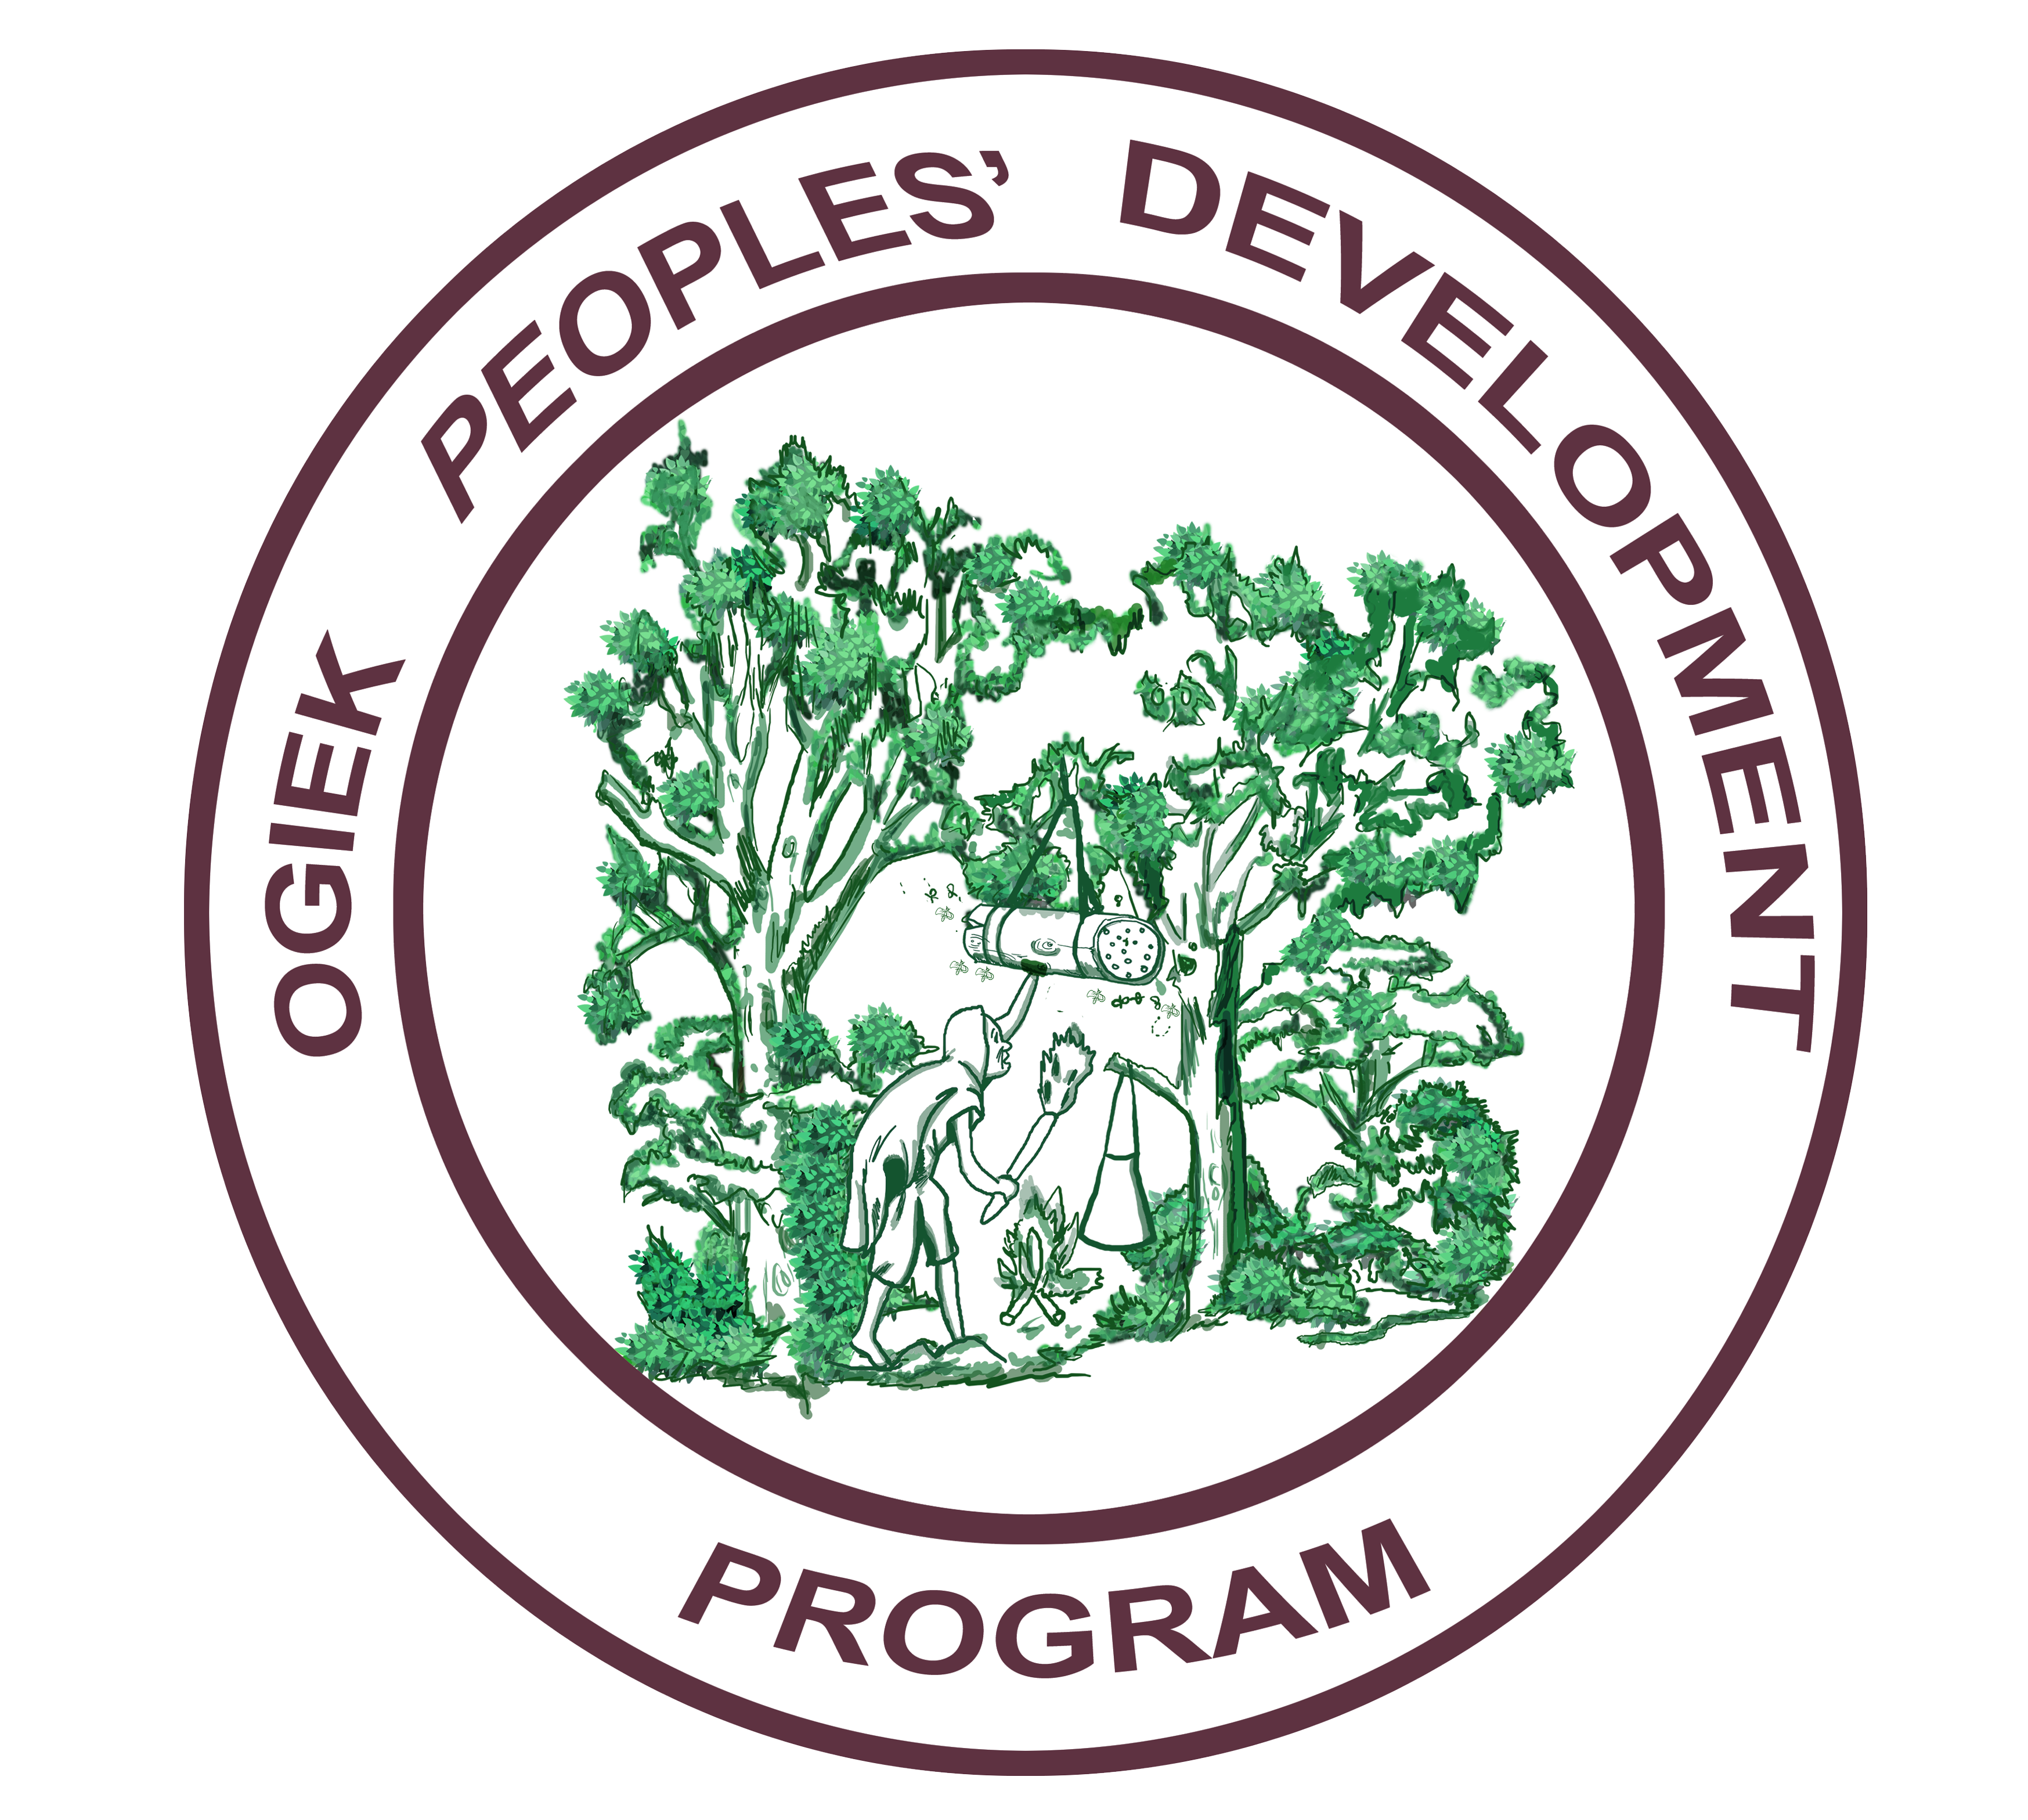 Ogiek Peoples Development Program